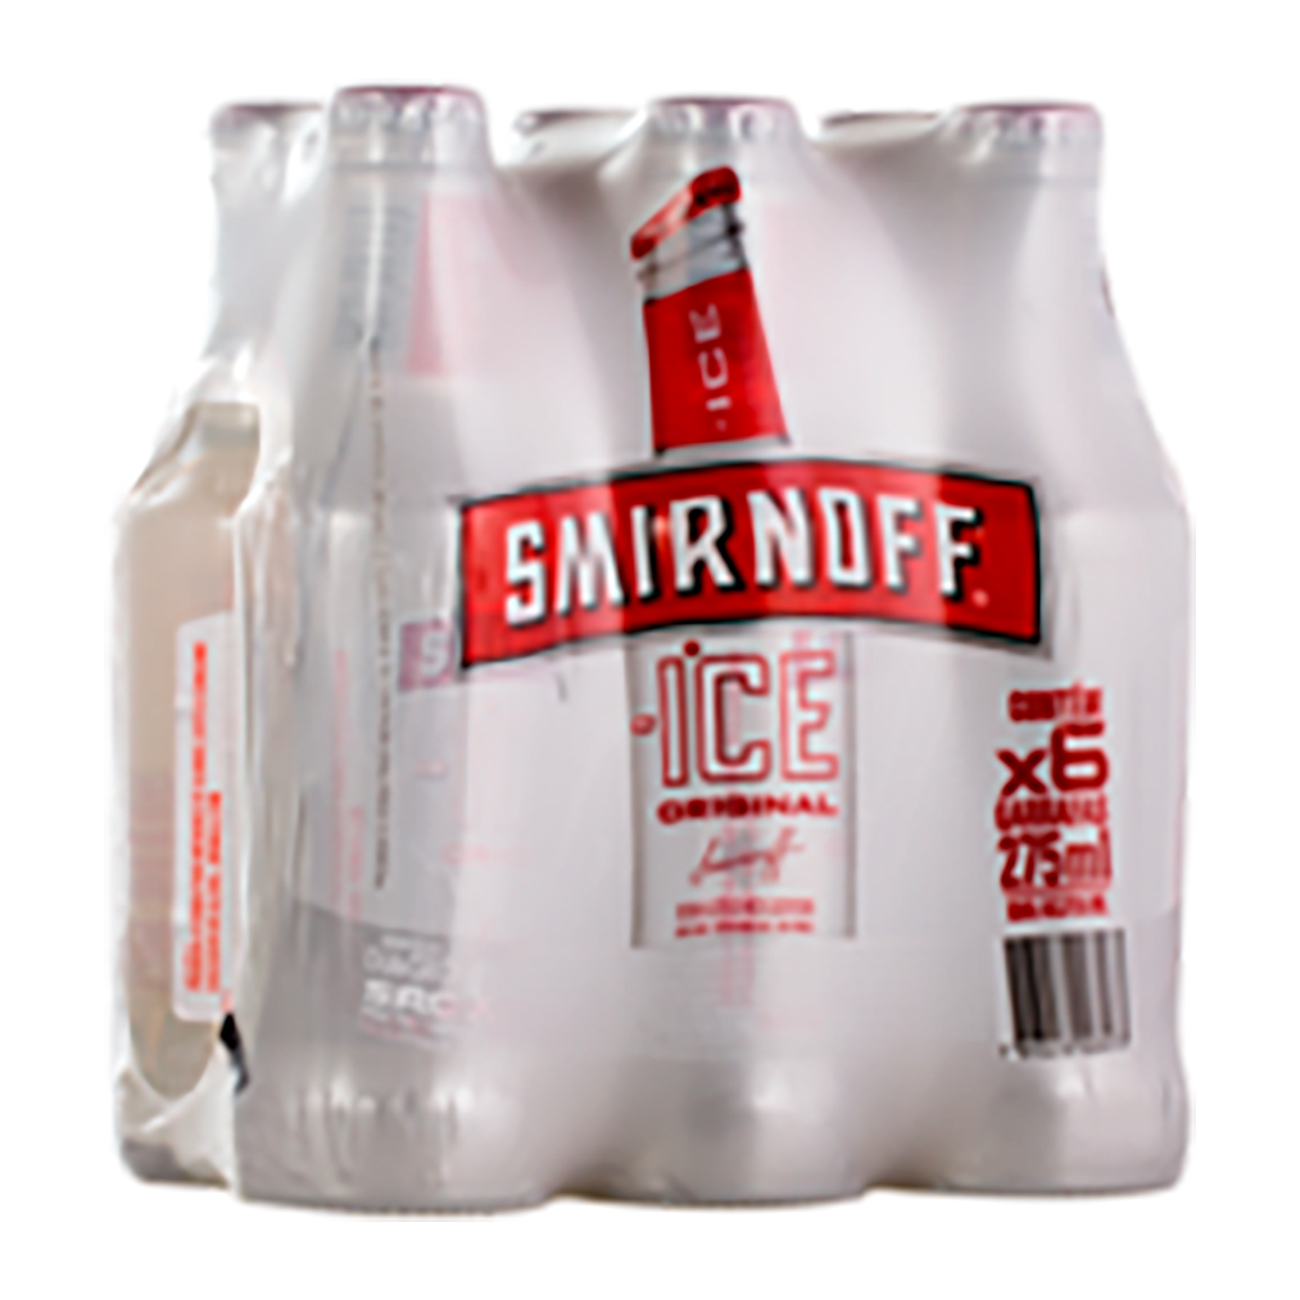 Pack Smirnoff Ice Alcolica Limo - 6 Unidades 275mL